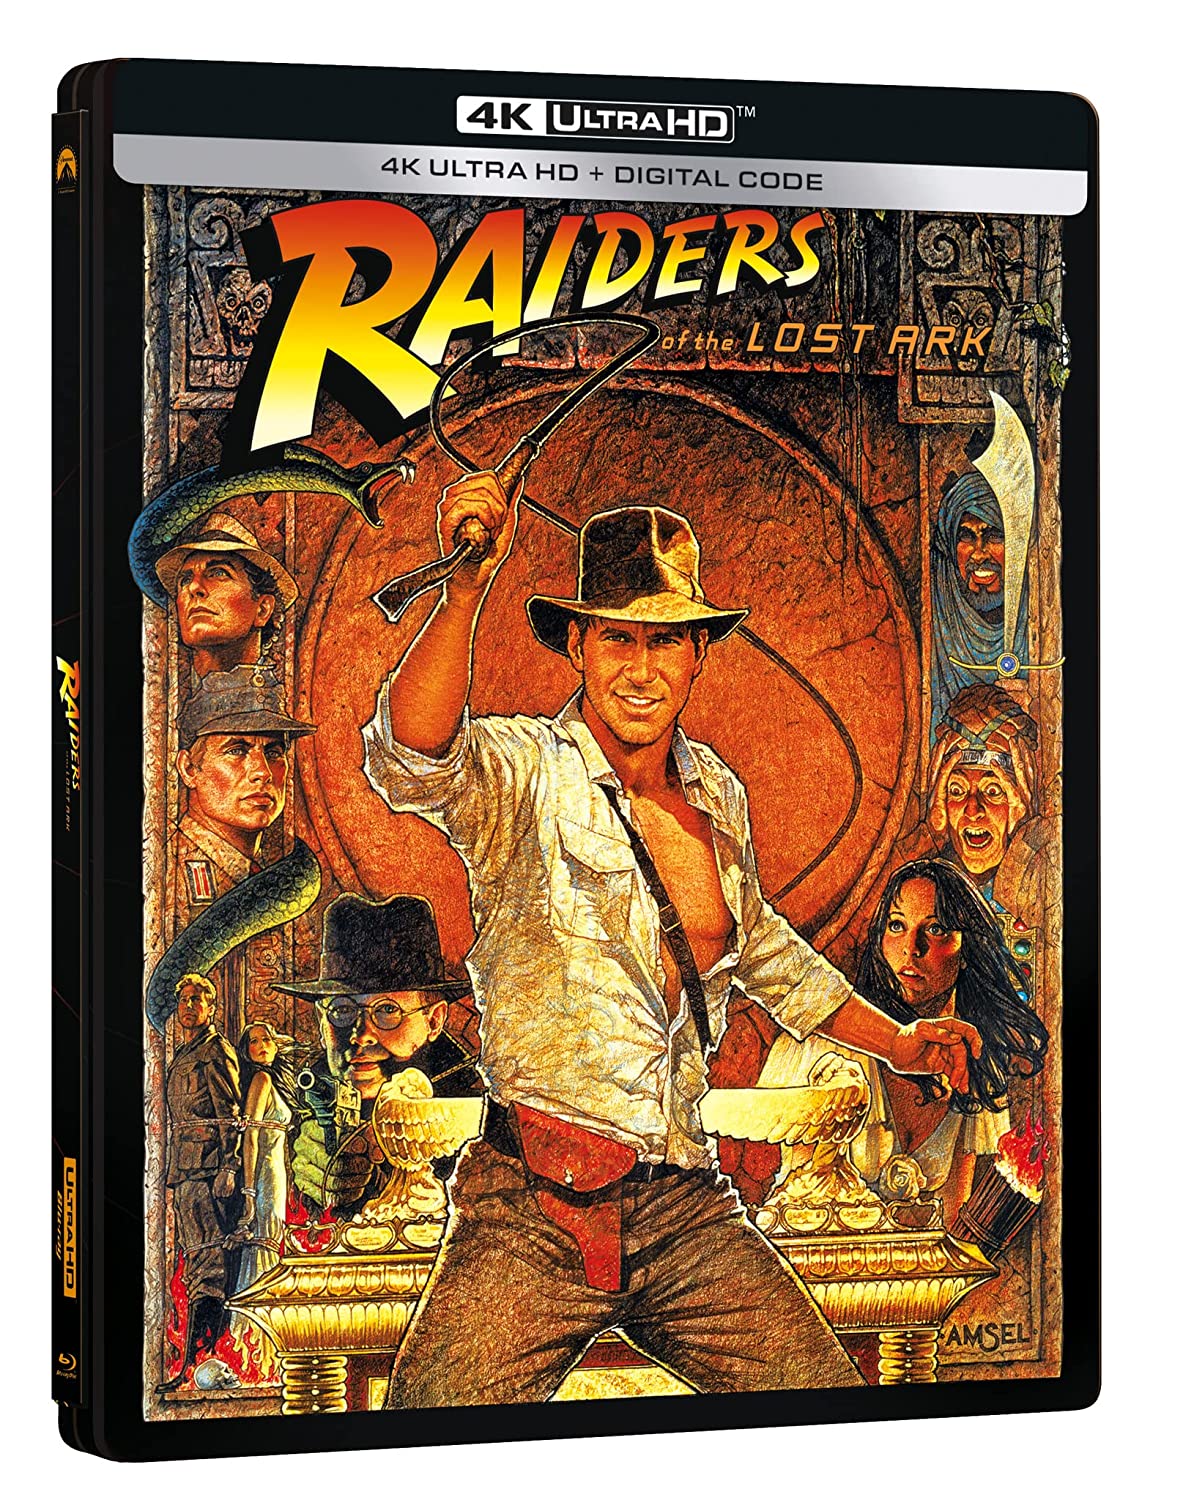 Indiana Jones and the Raiders of the Lost Ark 4k Blu-ray SteelBook